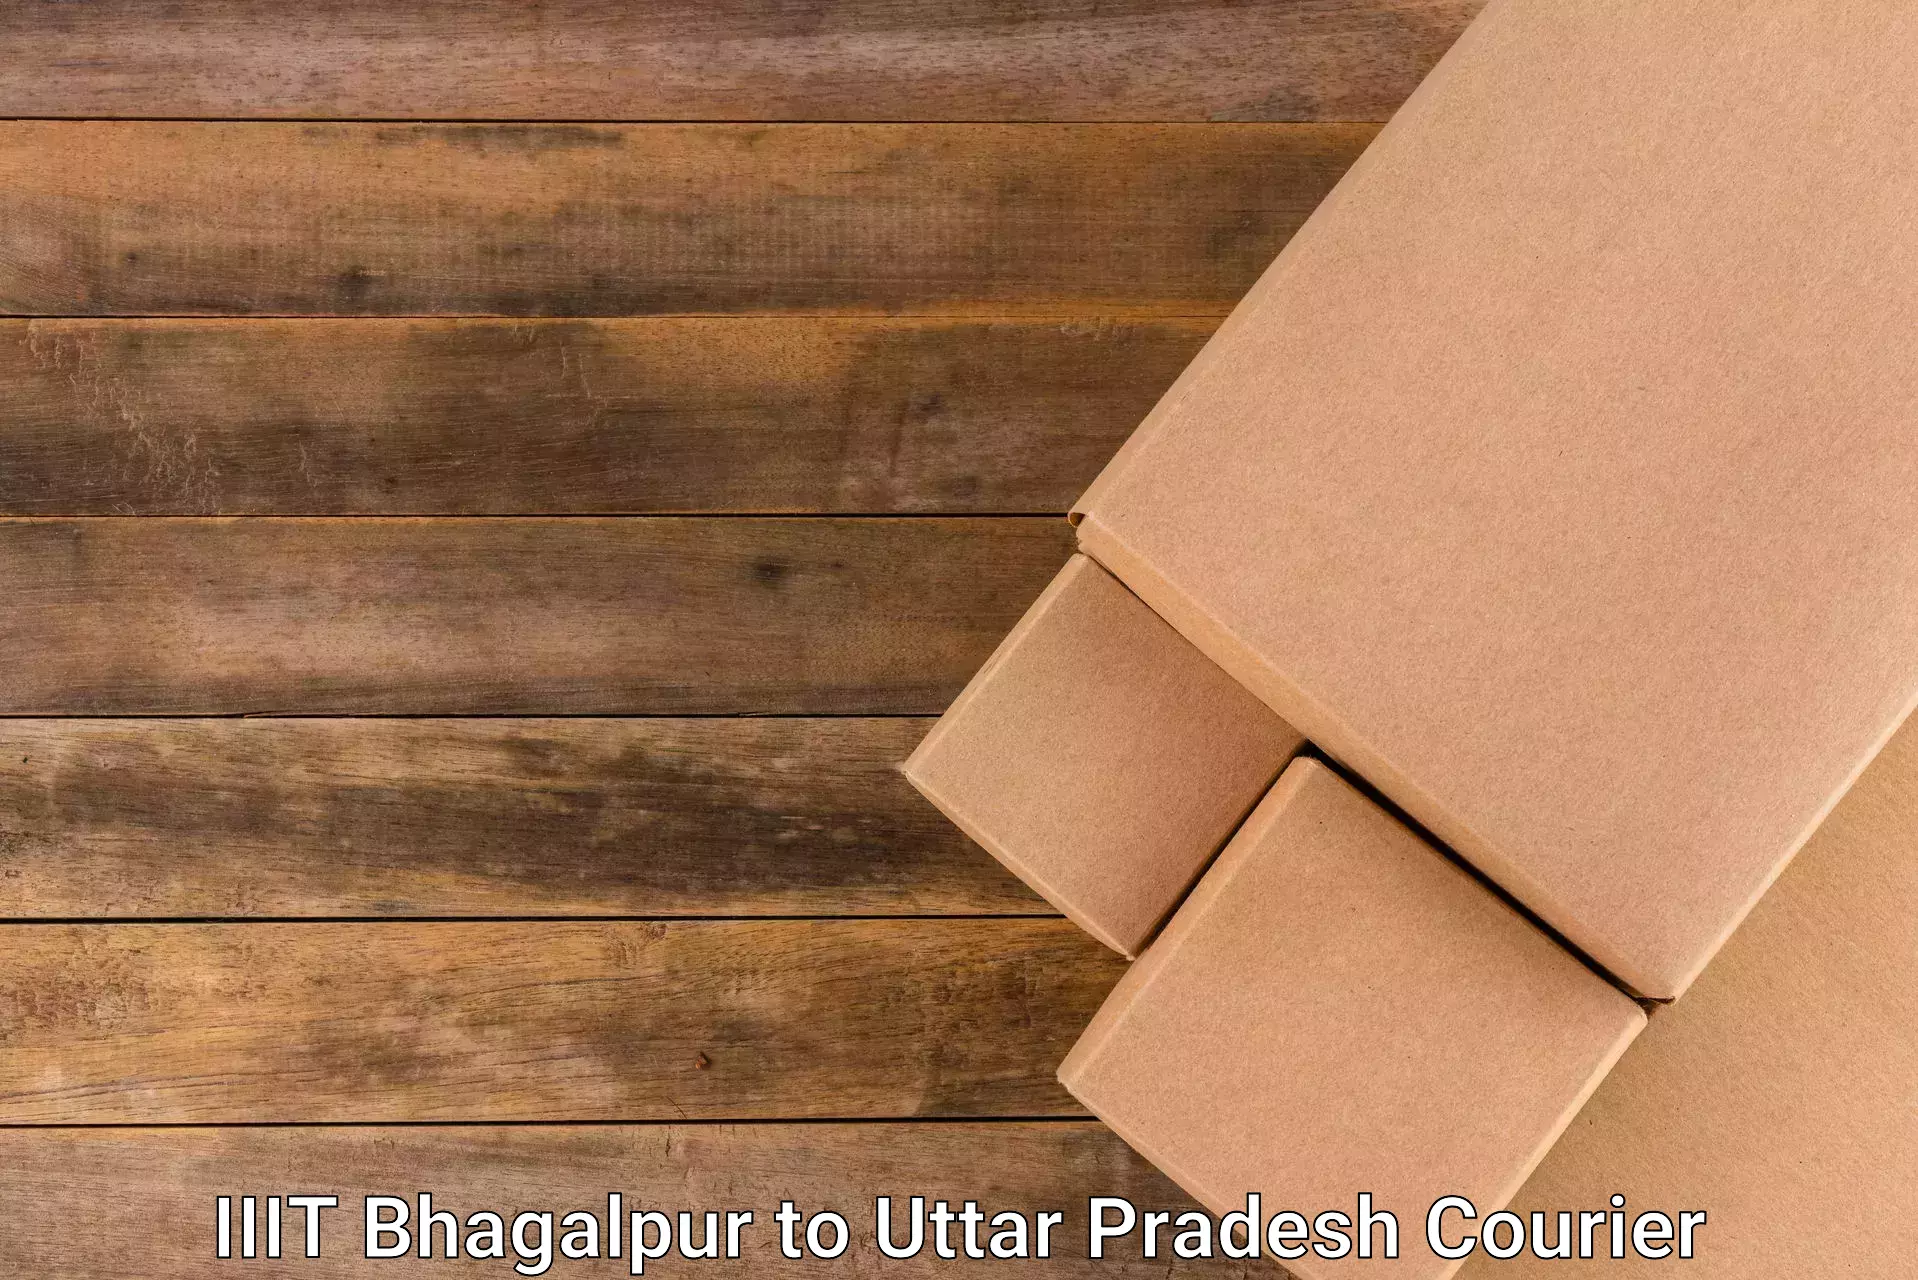 Professional courier handling IIIT Bhagalpur to IIT Varanasi